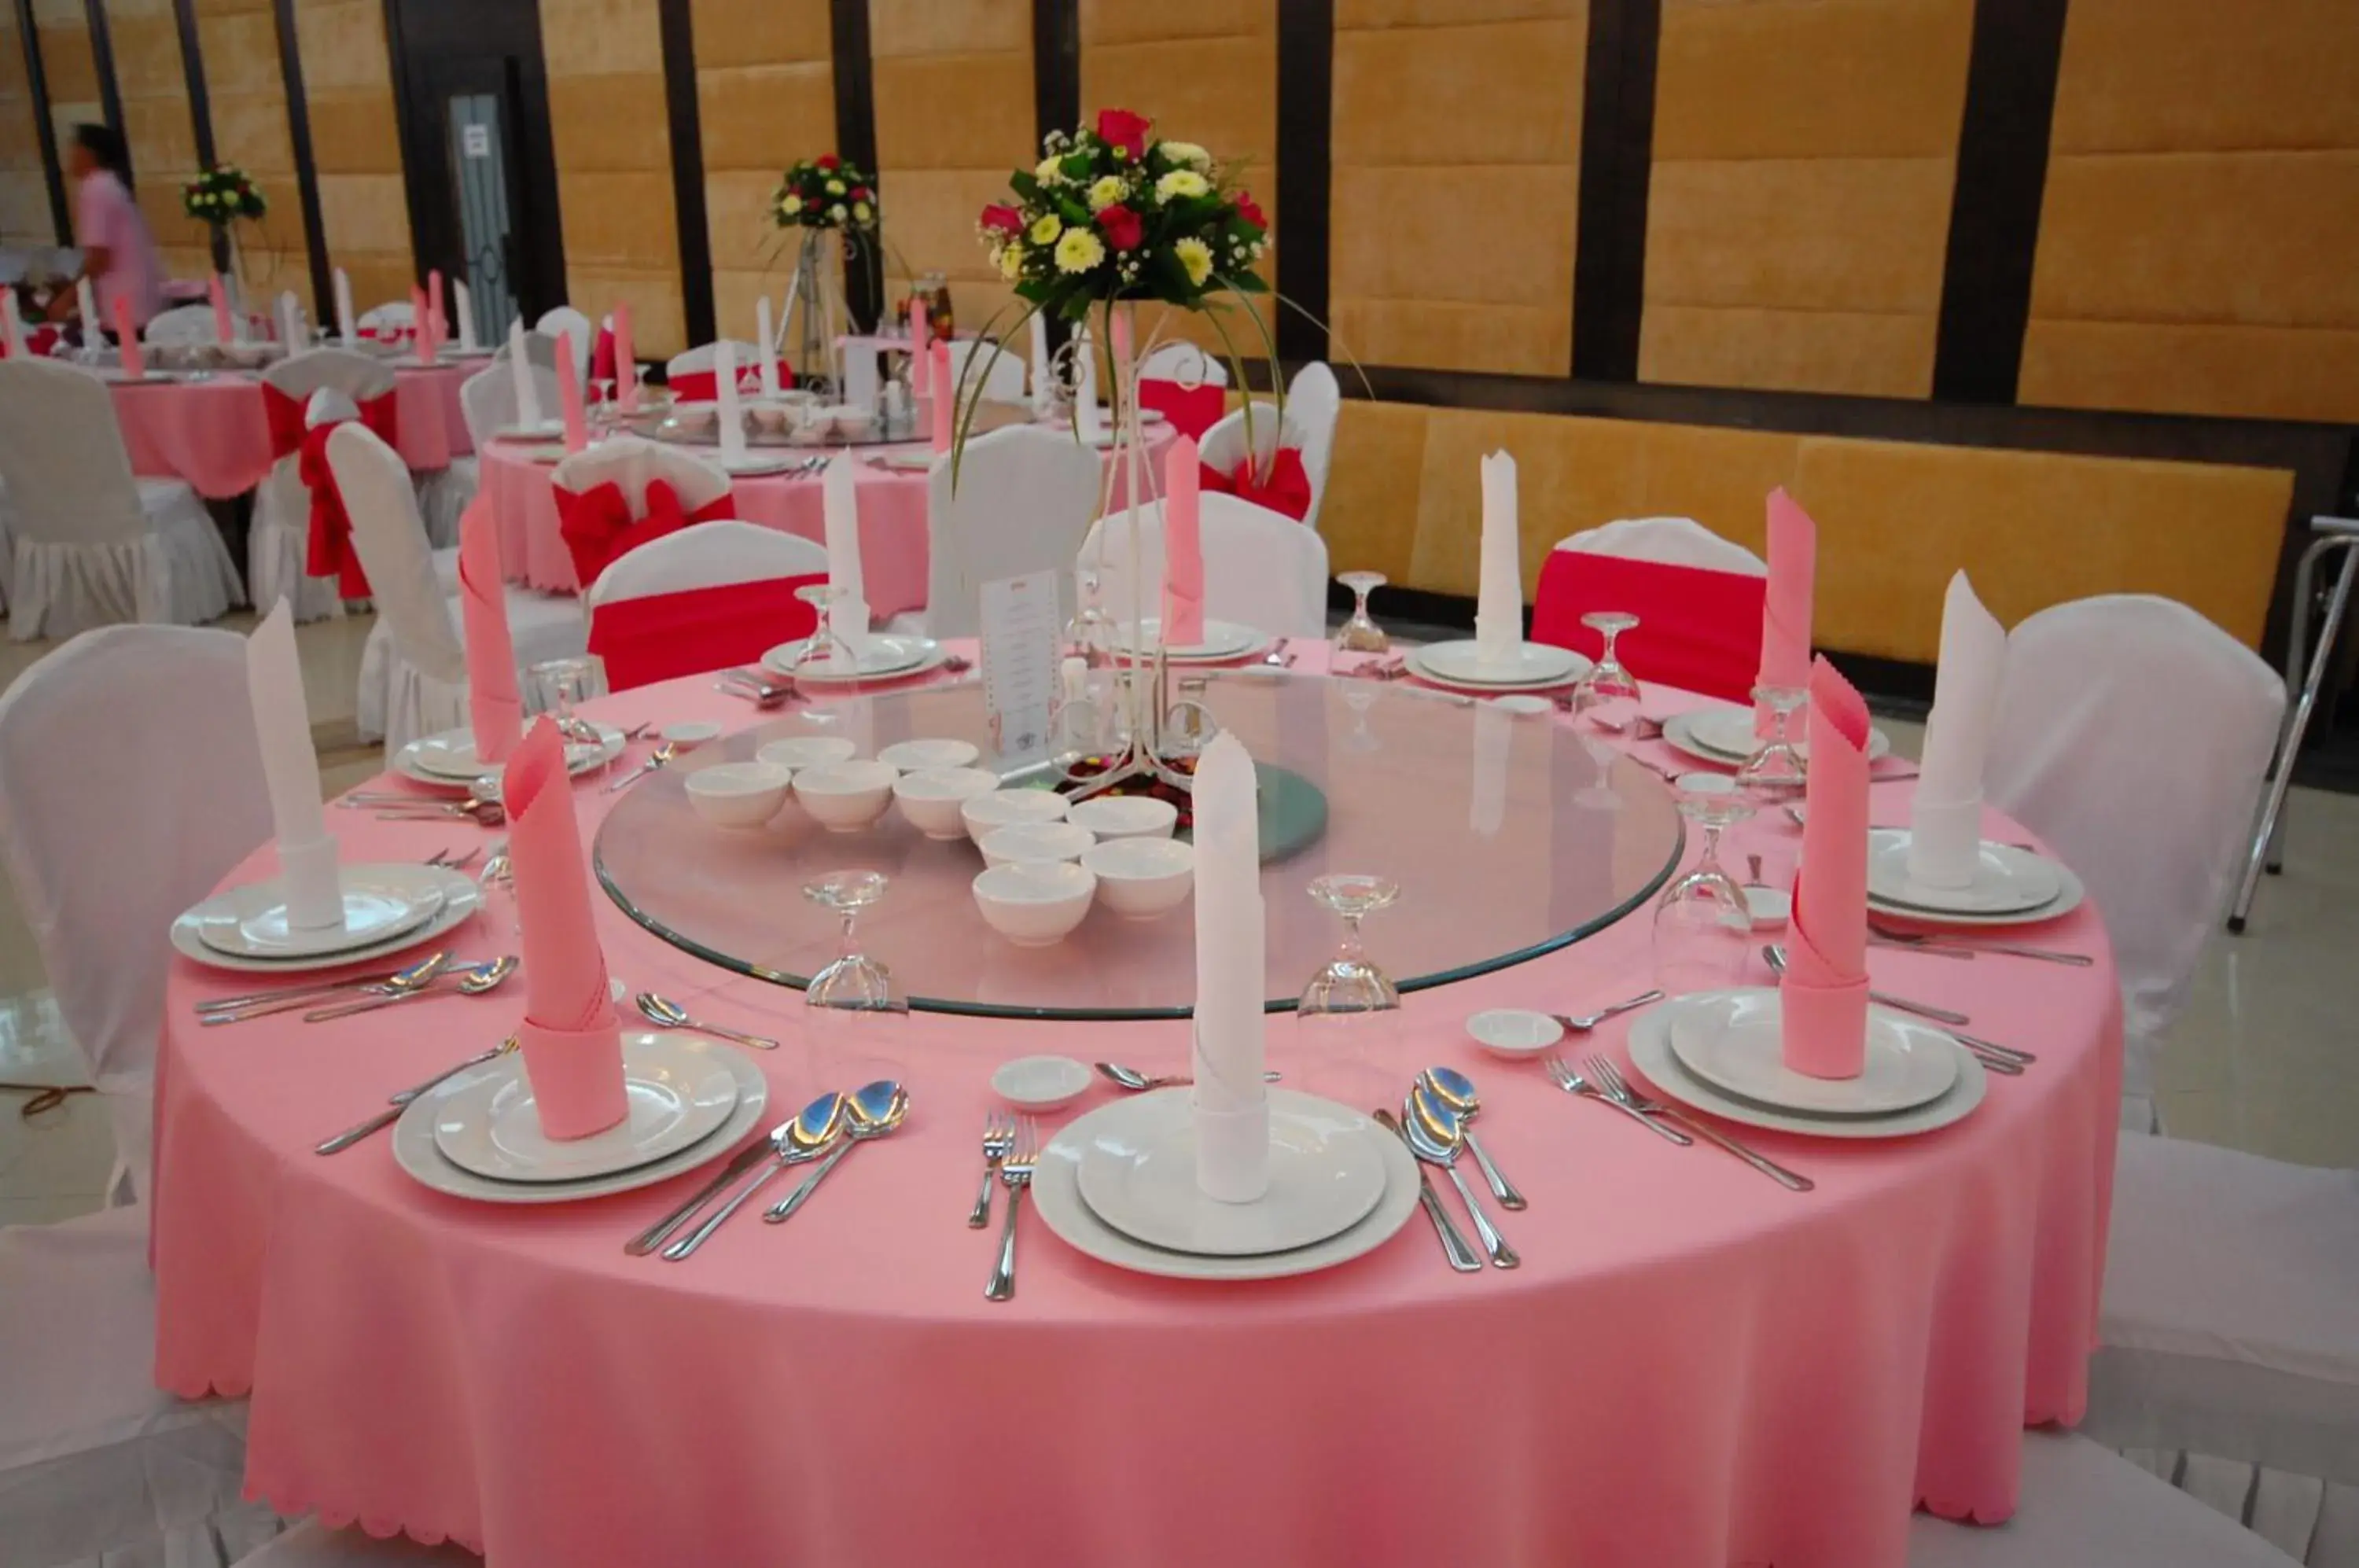 Banquet/Function facilities, Banquet Facilities in A&a Plaza Hotel